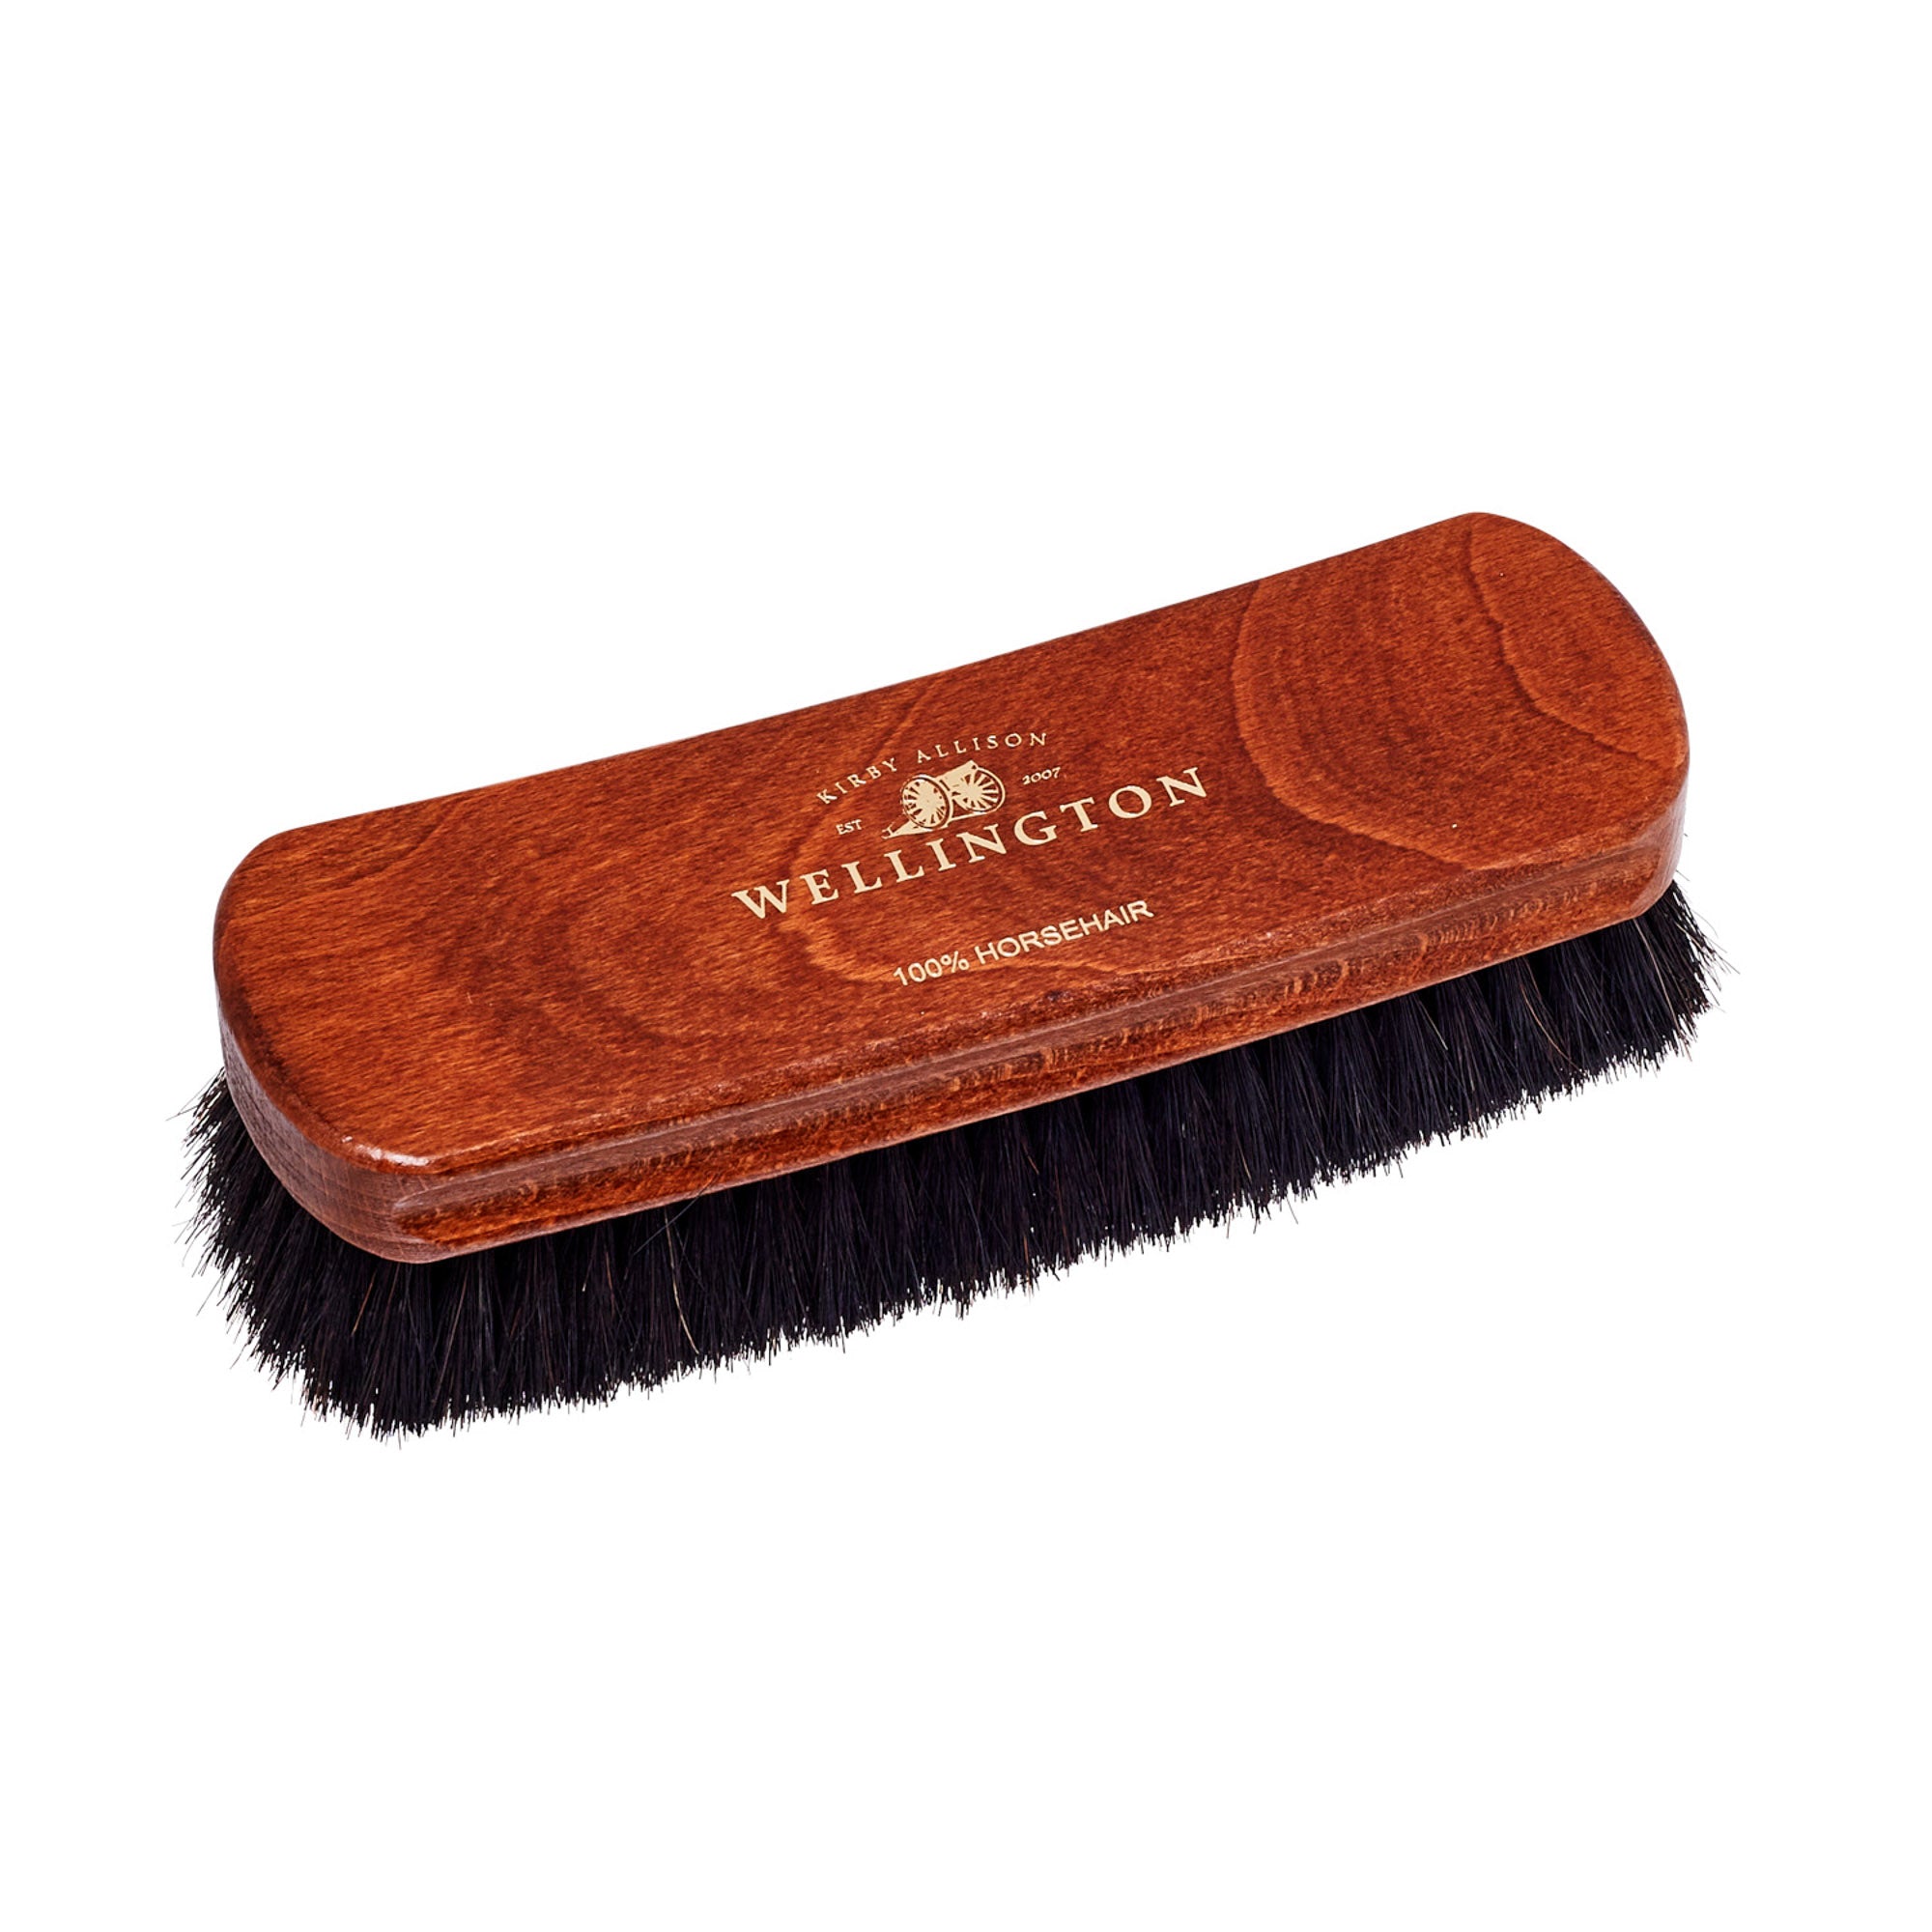 A highest quality Medium Wellington Horsehair Shoe Polishing Brush with the word KirbyAllison.com on it.